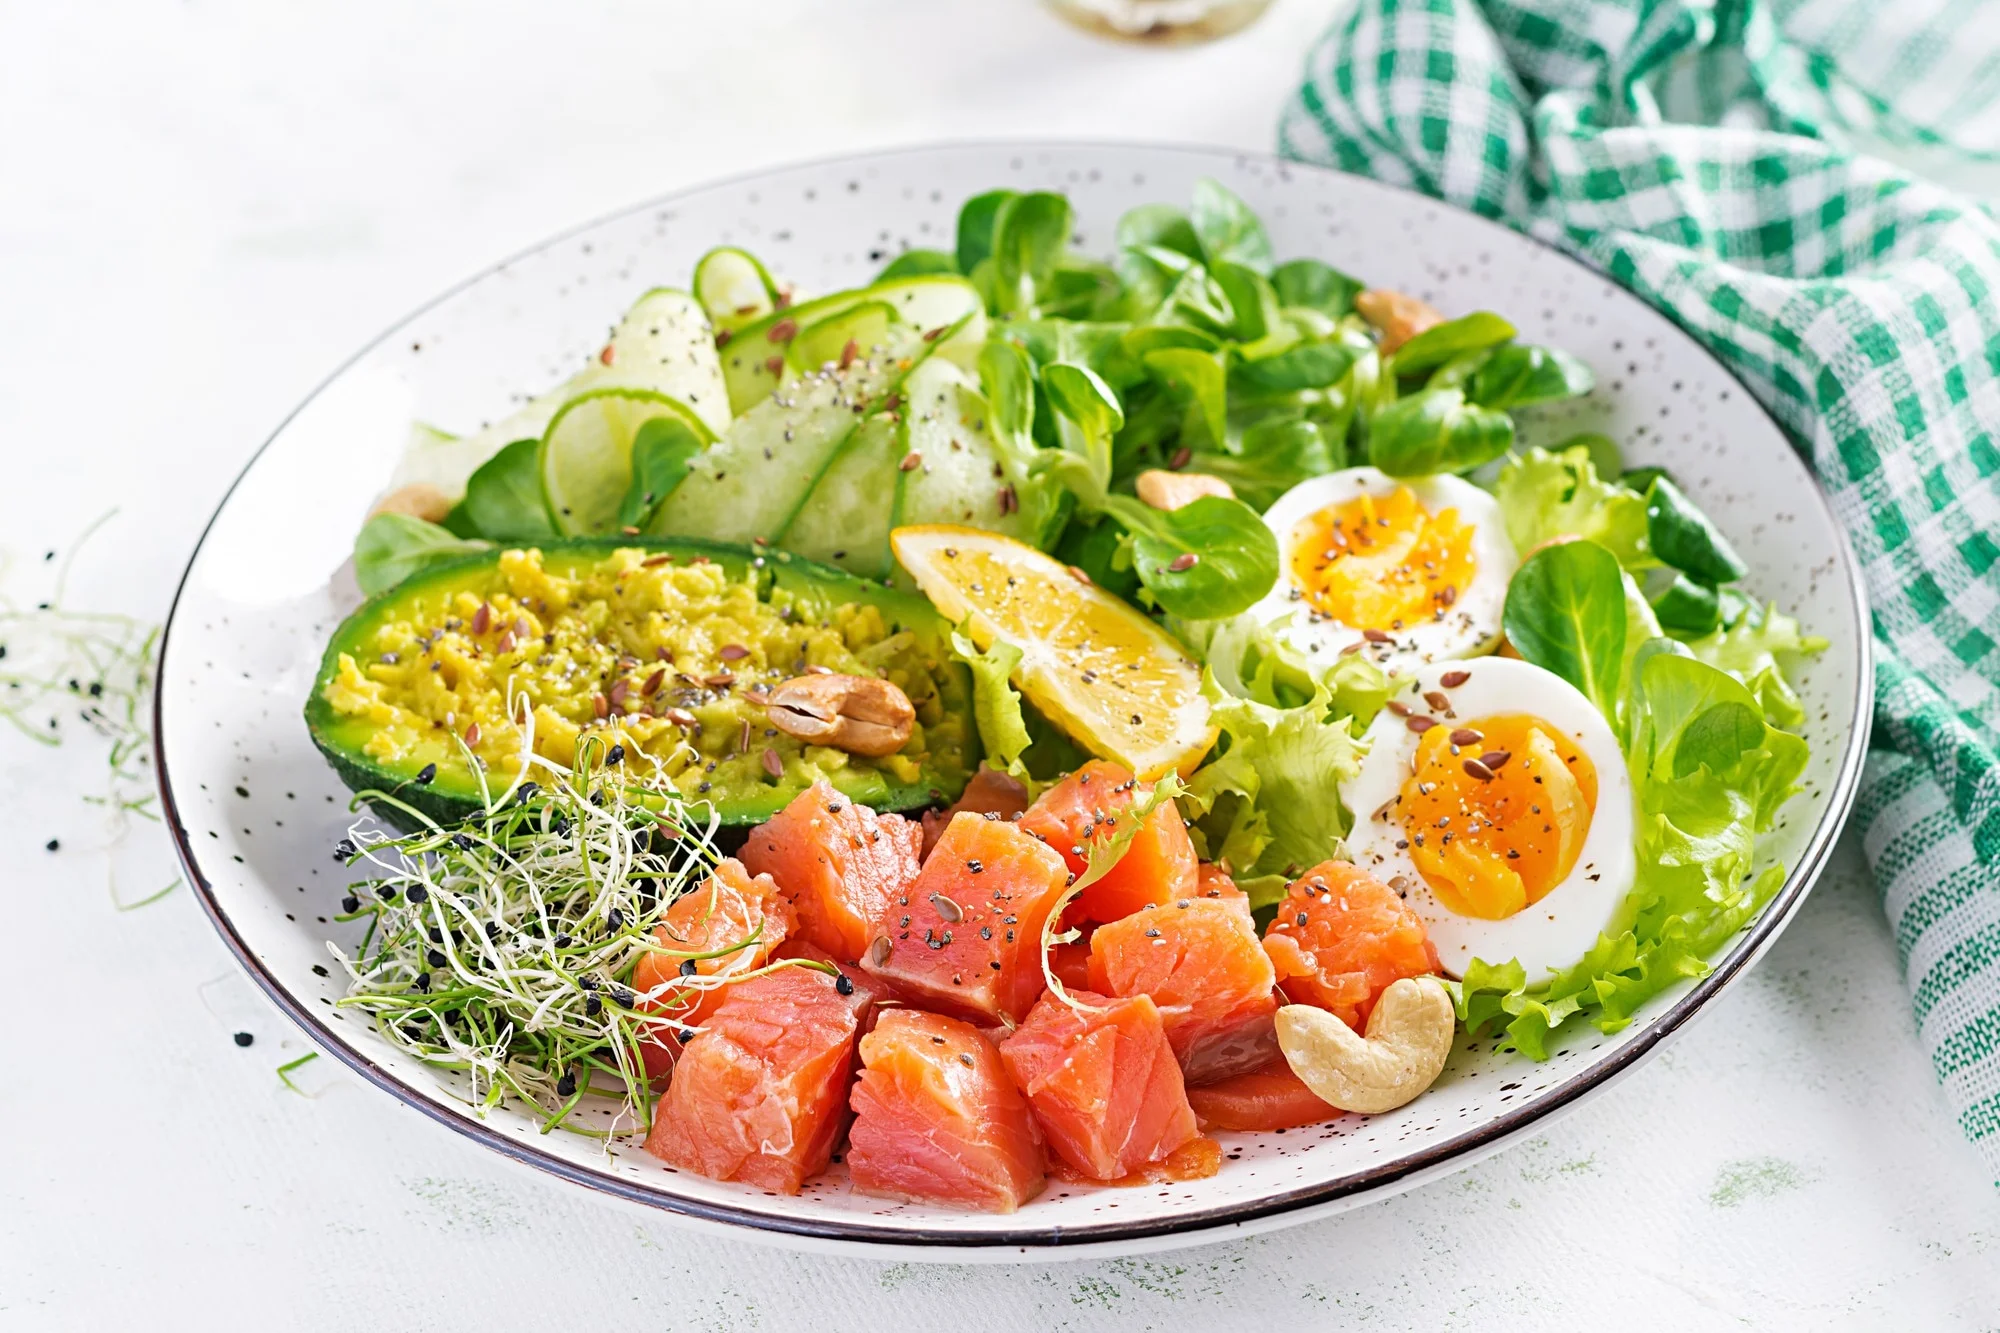 ketogenic diet breakfast salt salmon salad with greens cucumbers eggs avocado keto paleo lunch 2829 20254